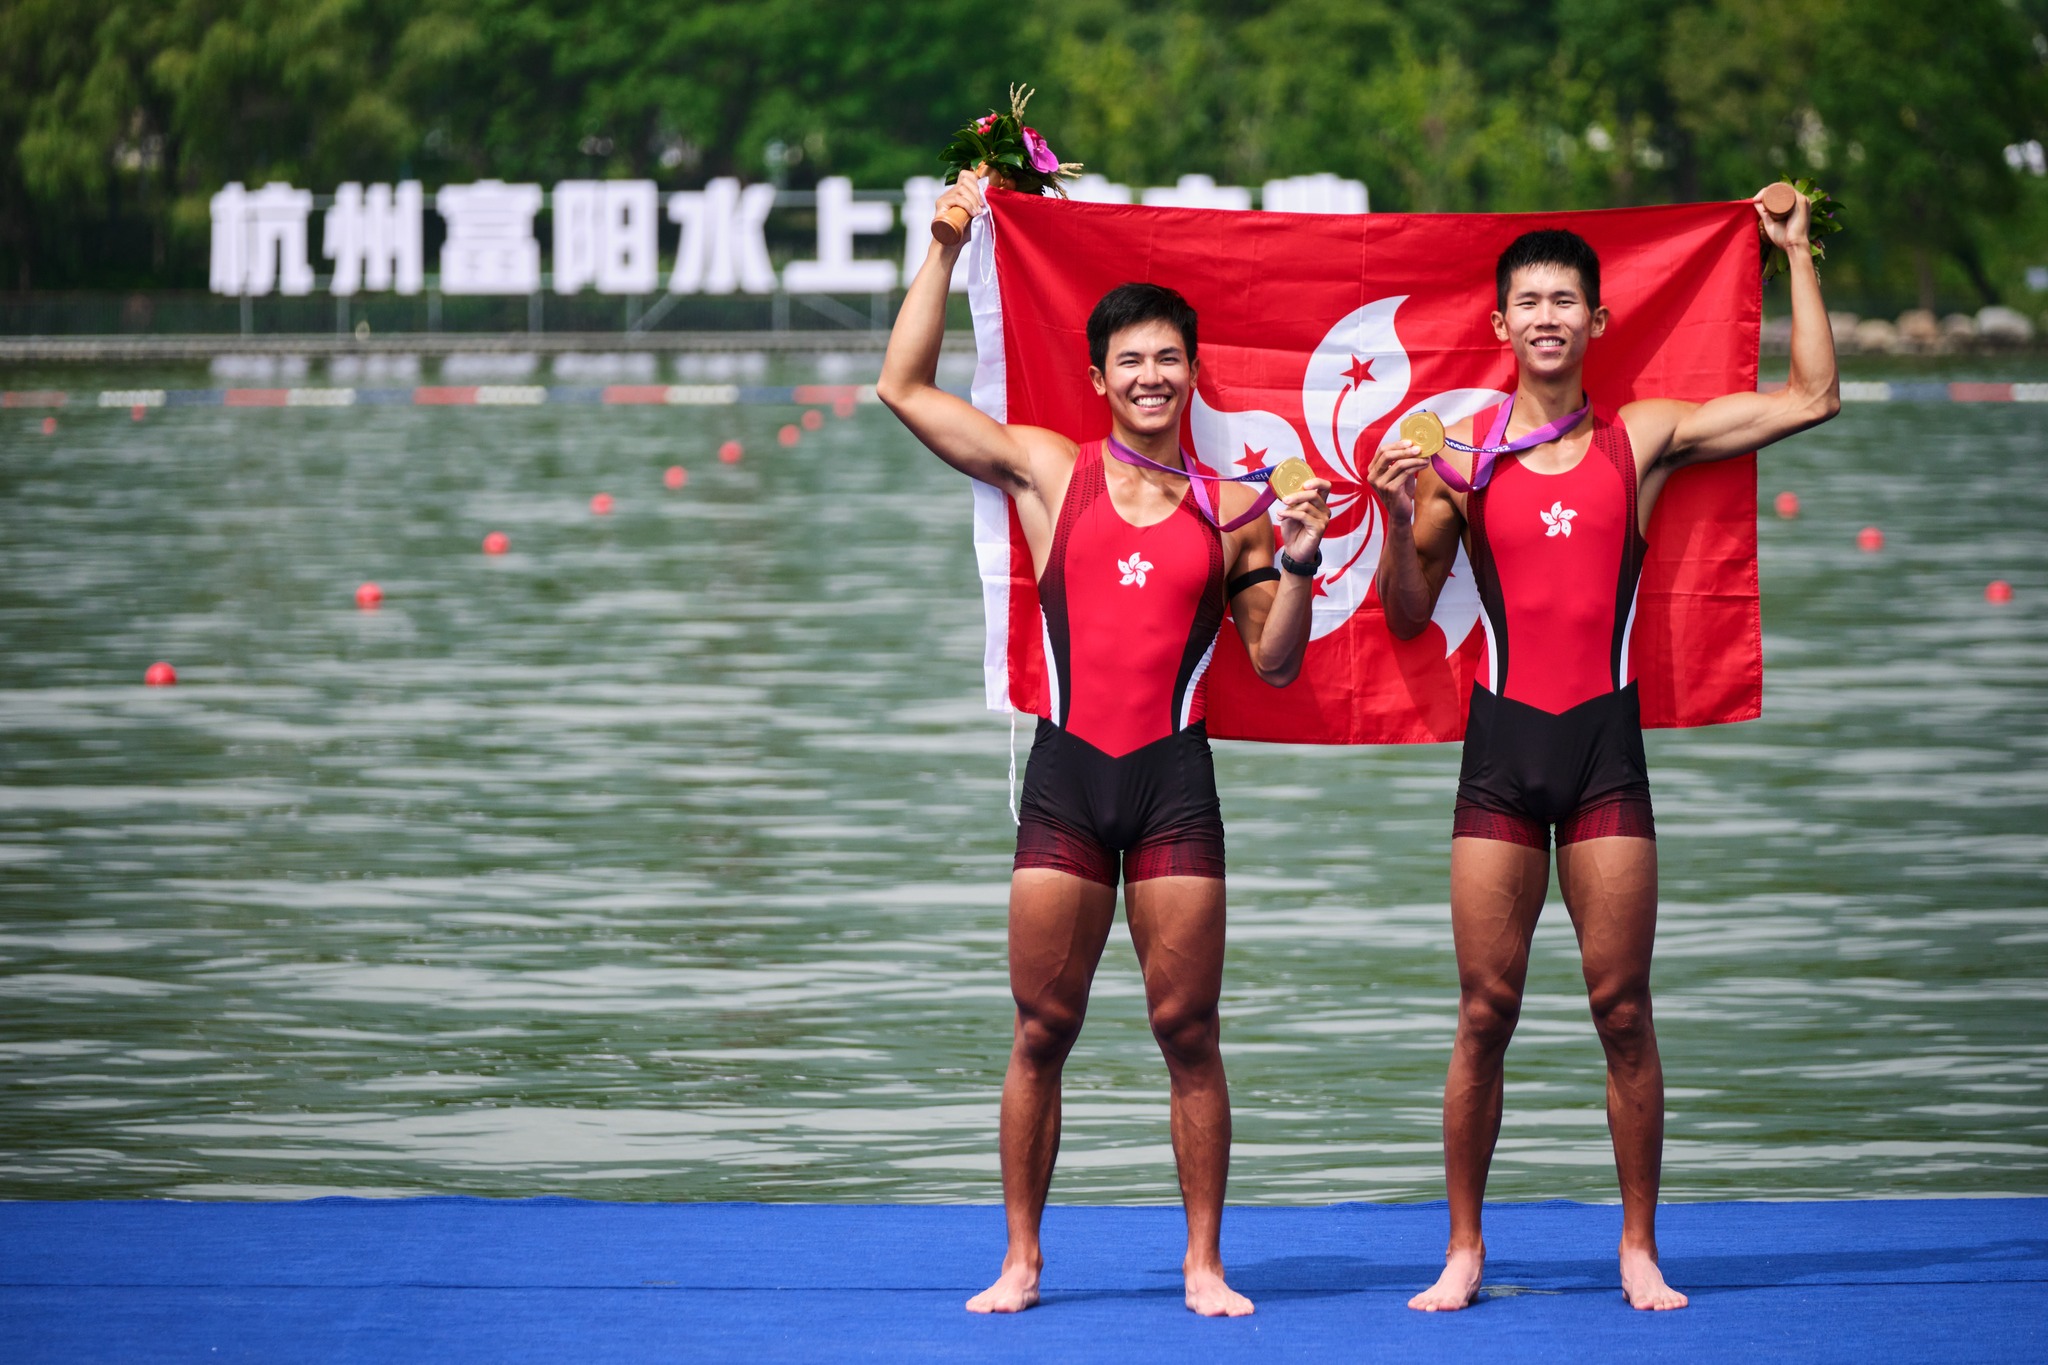 Rowing Team duo of Lam San-tung (L) and Wong Wai-chun win the gold medal for Hong Kong, China in Asian Games 2023.